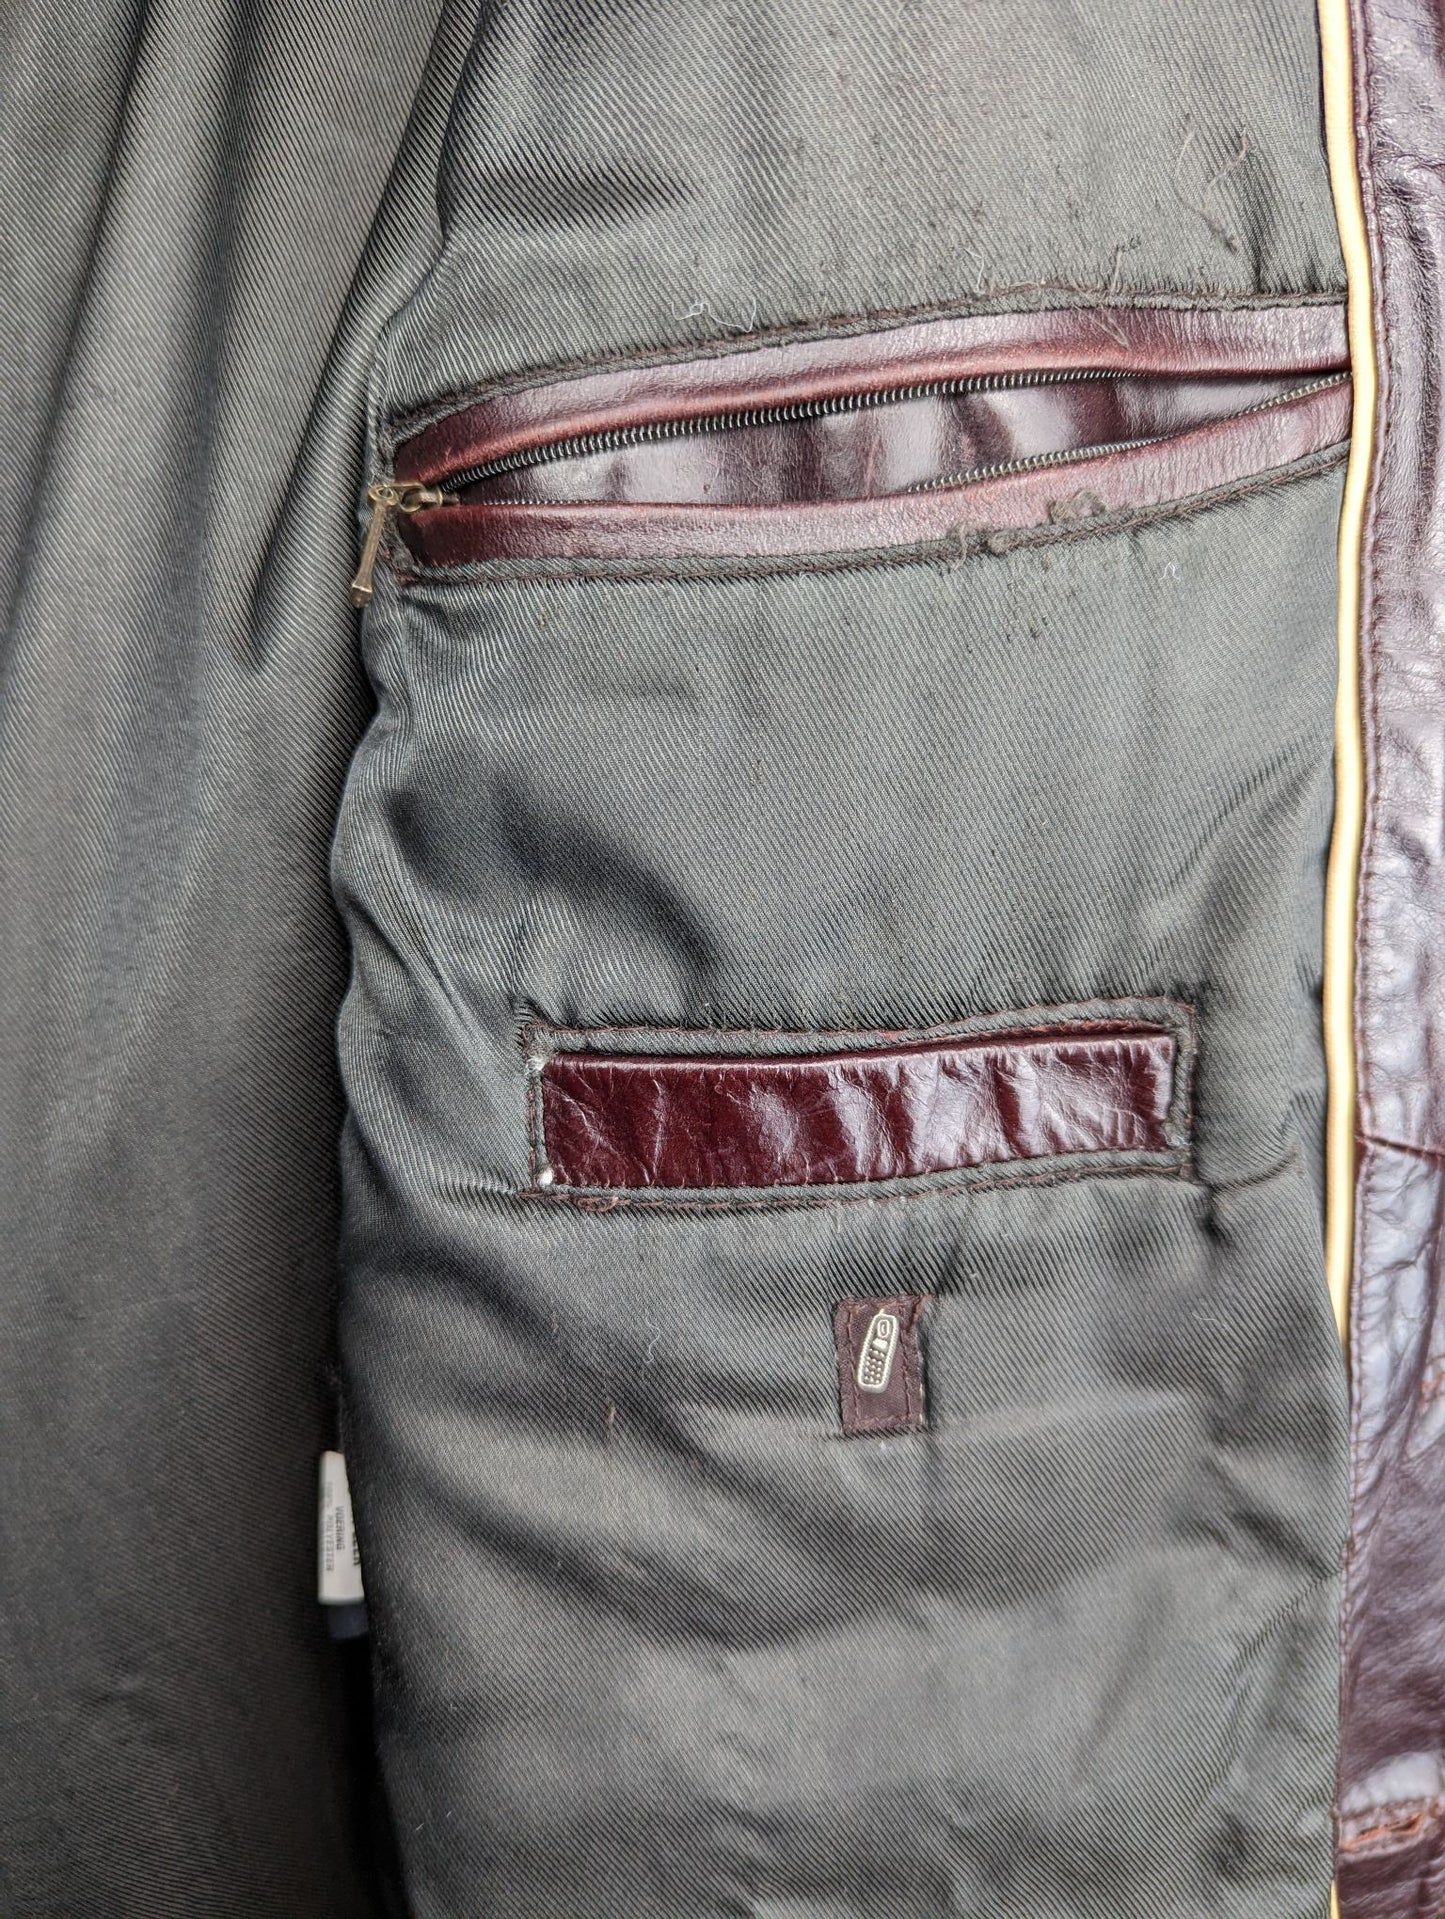 Noble Classic Vintage Brown Button Leather Jacket Men Size Medium